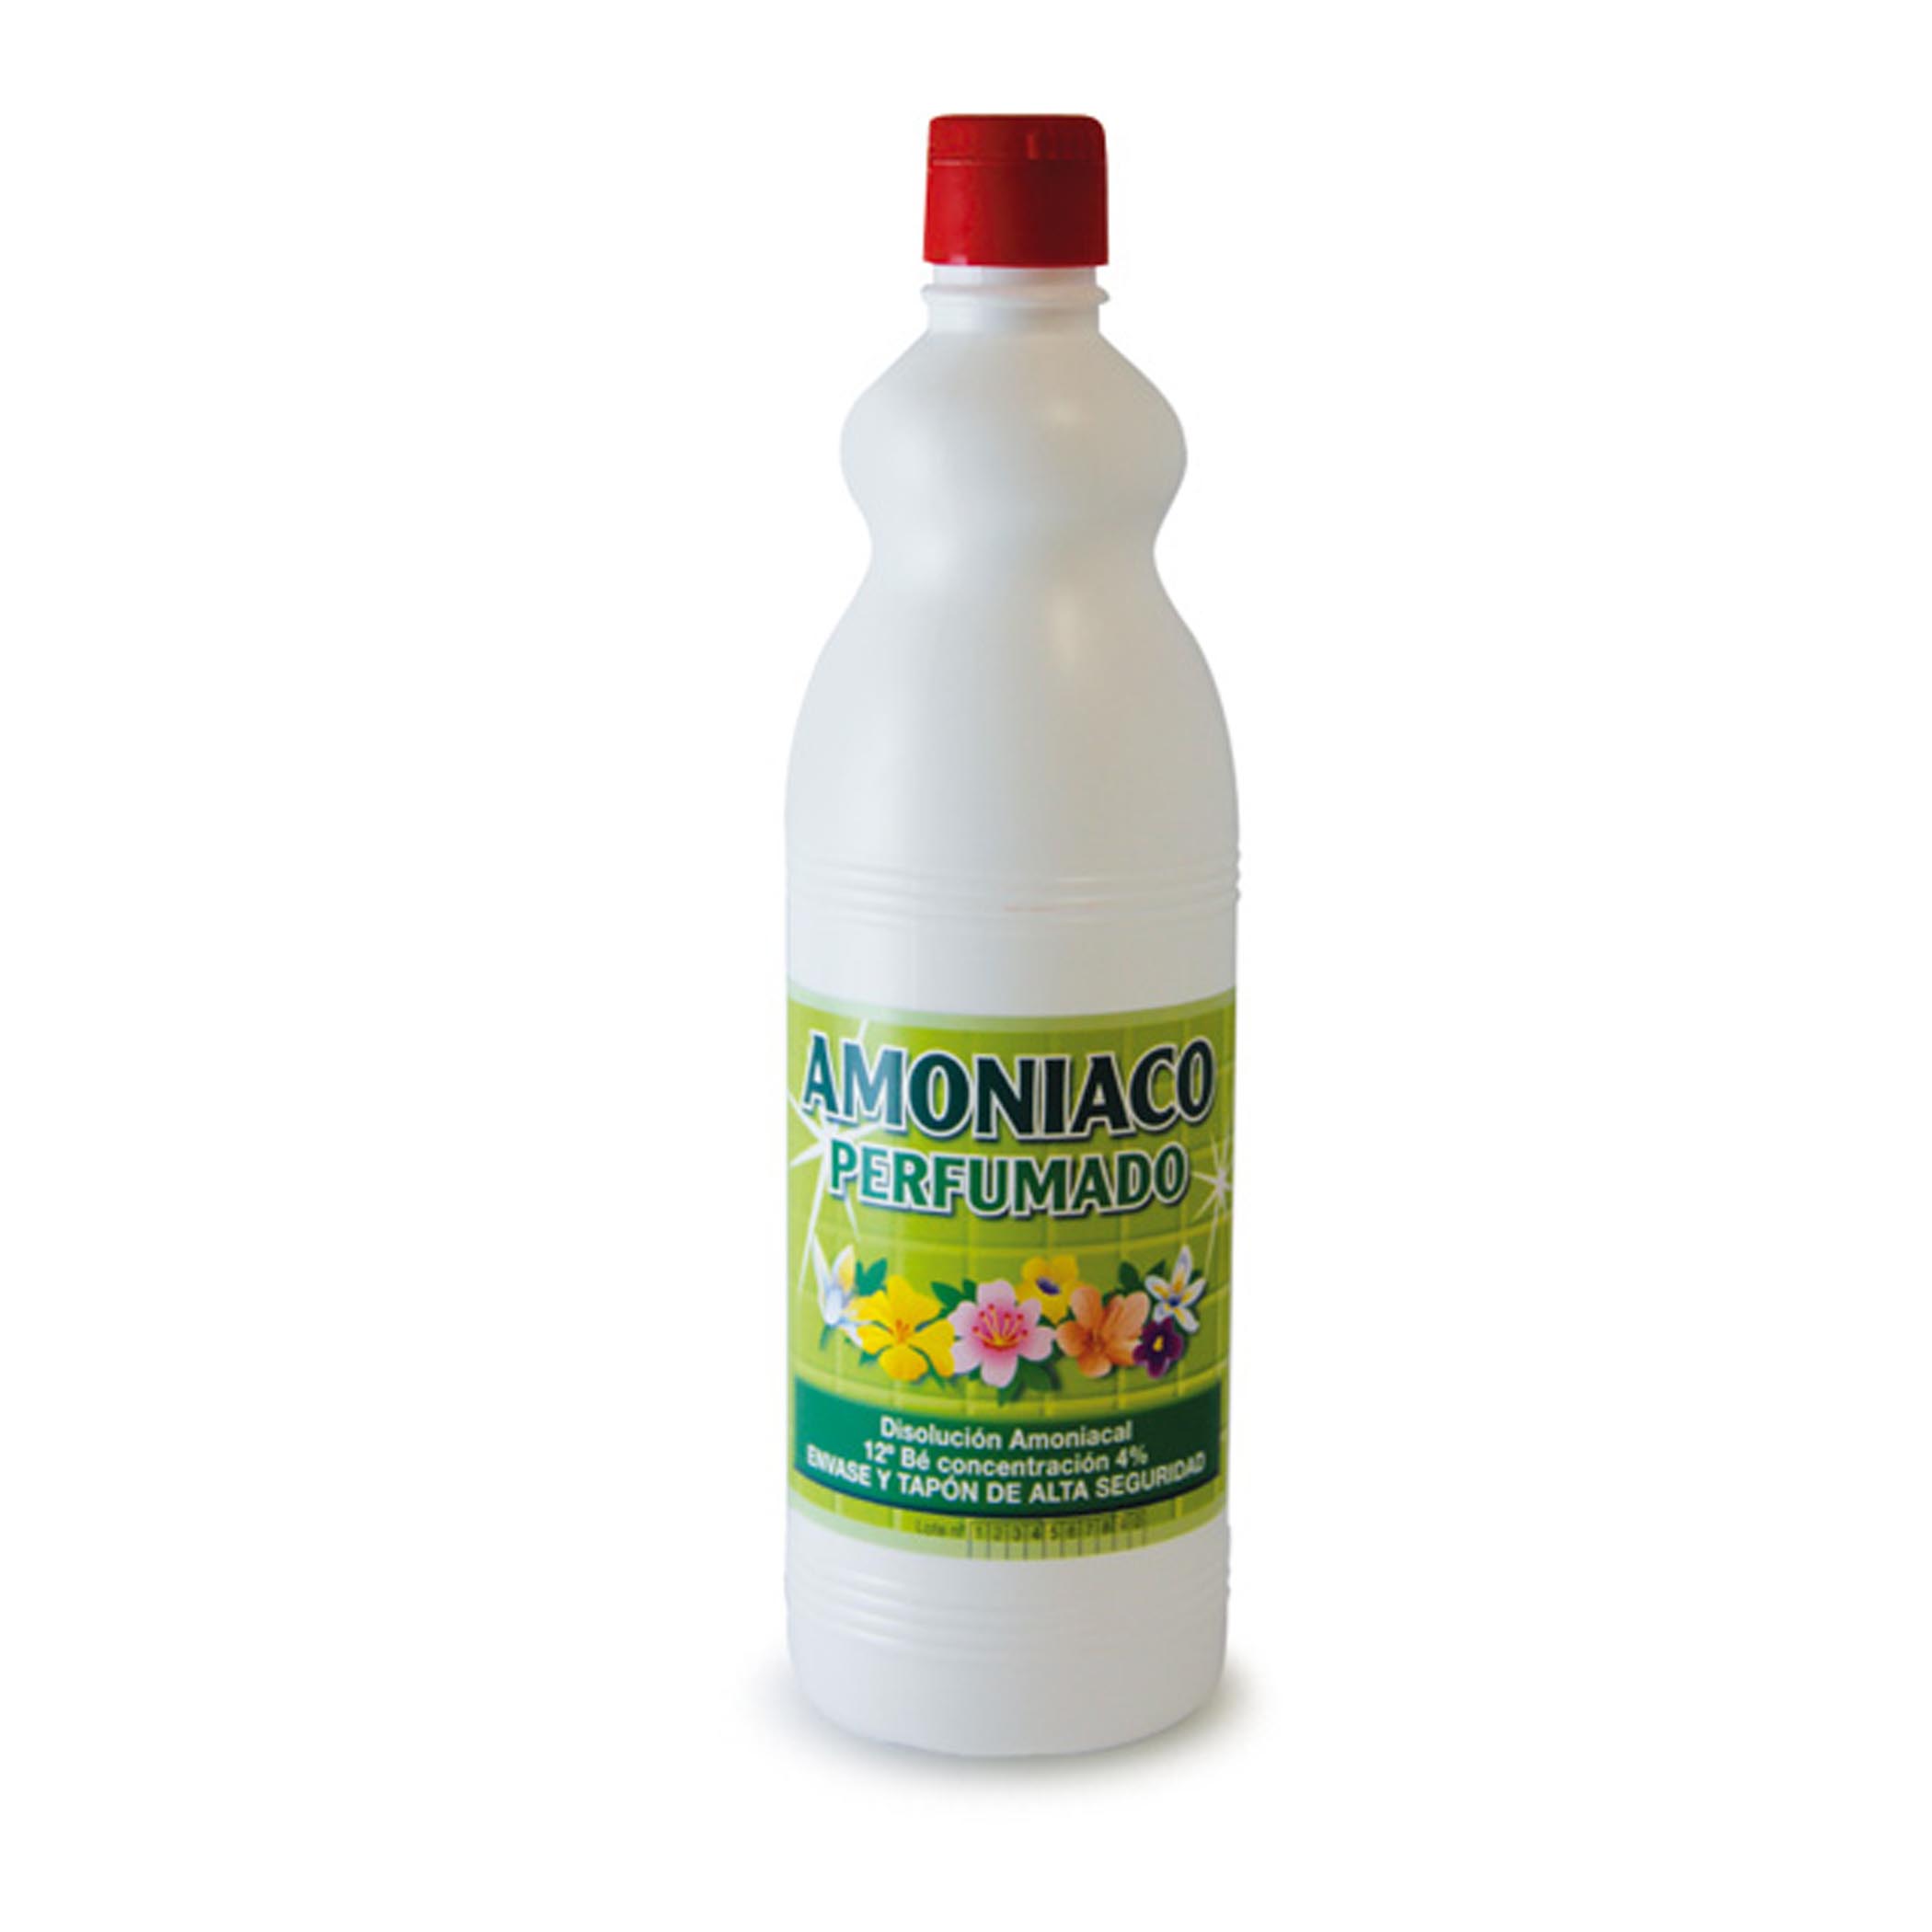 Amoniaco Perfumado PLAINSUR amoniaco para moquetas